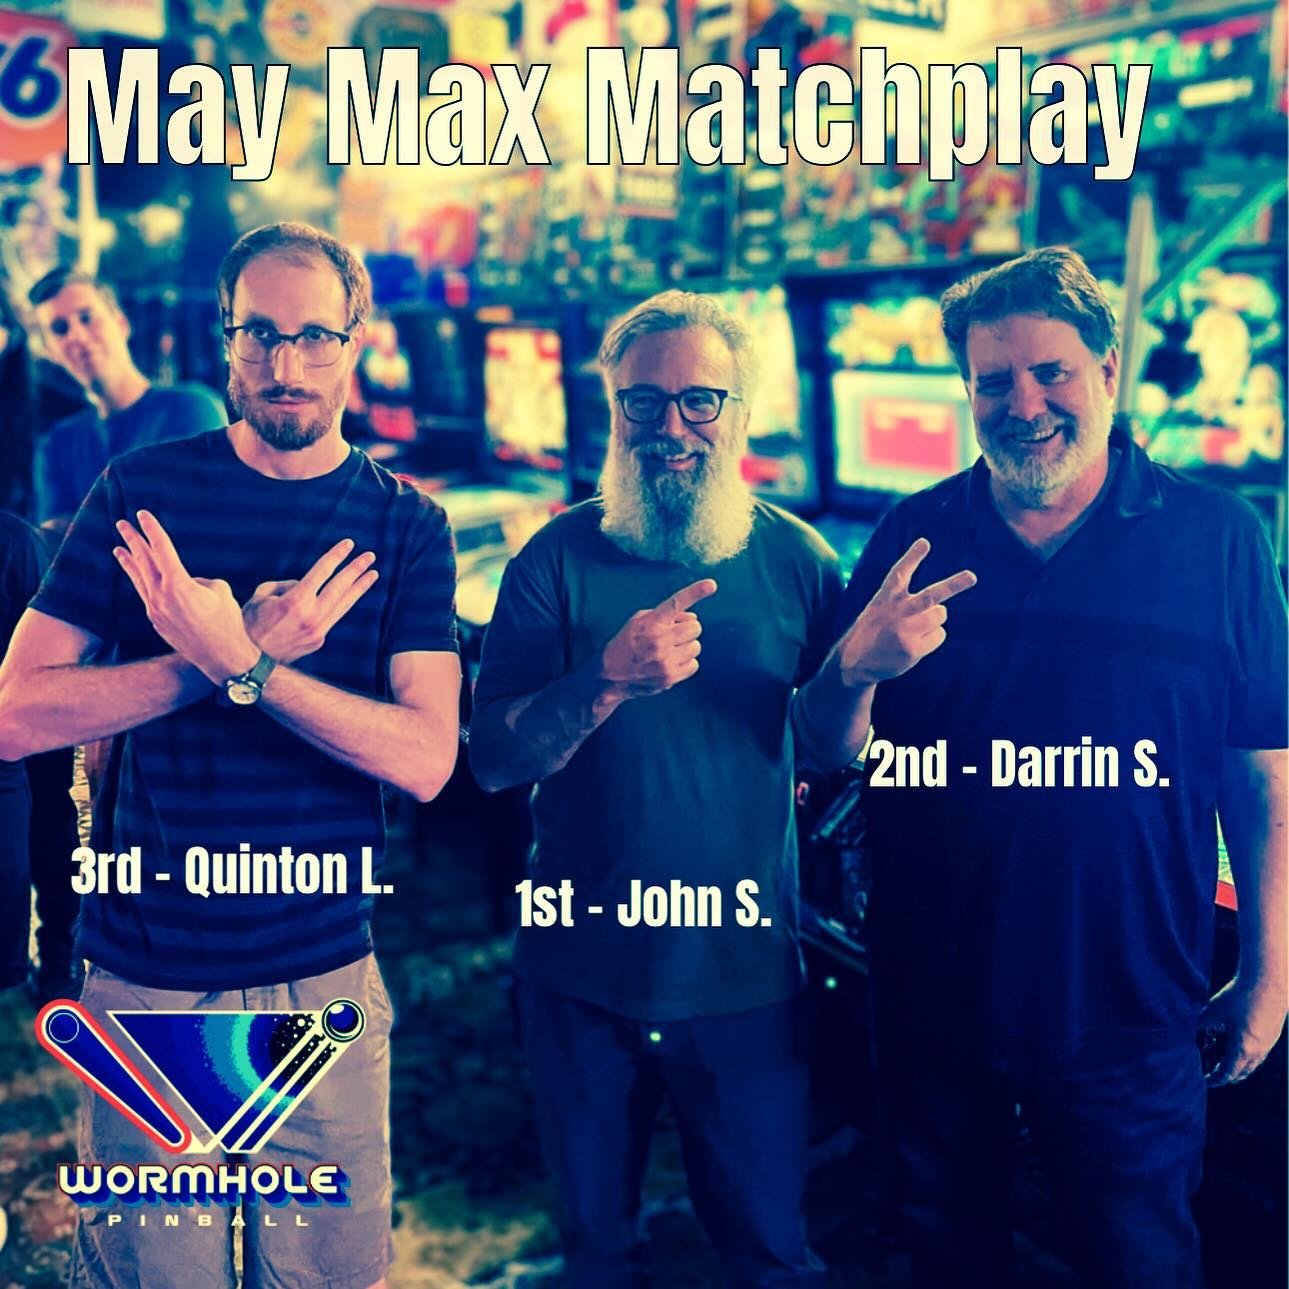 Max Matchplay Winners

1st - John Speights
2nd - Darrin Schonefeld
3rd - Quinton Love